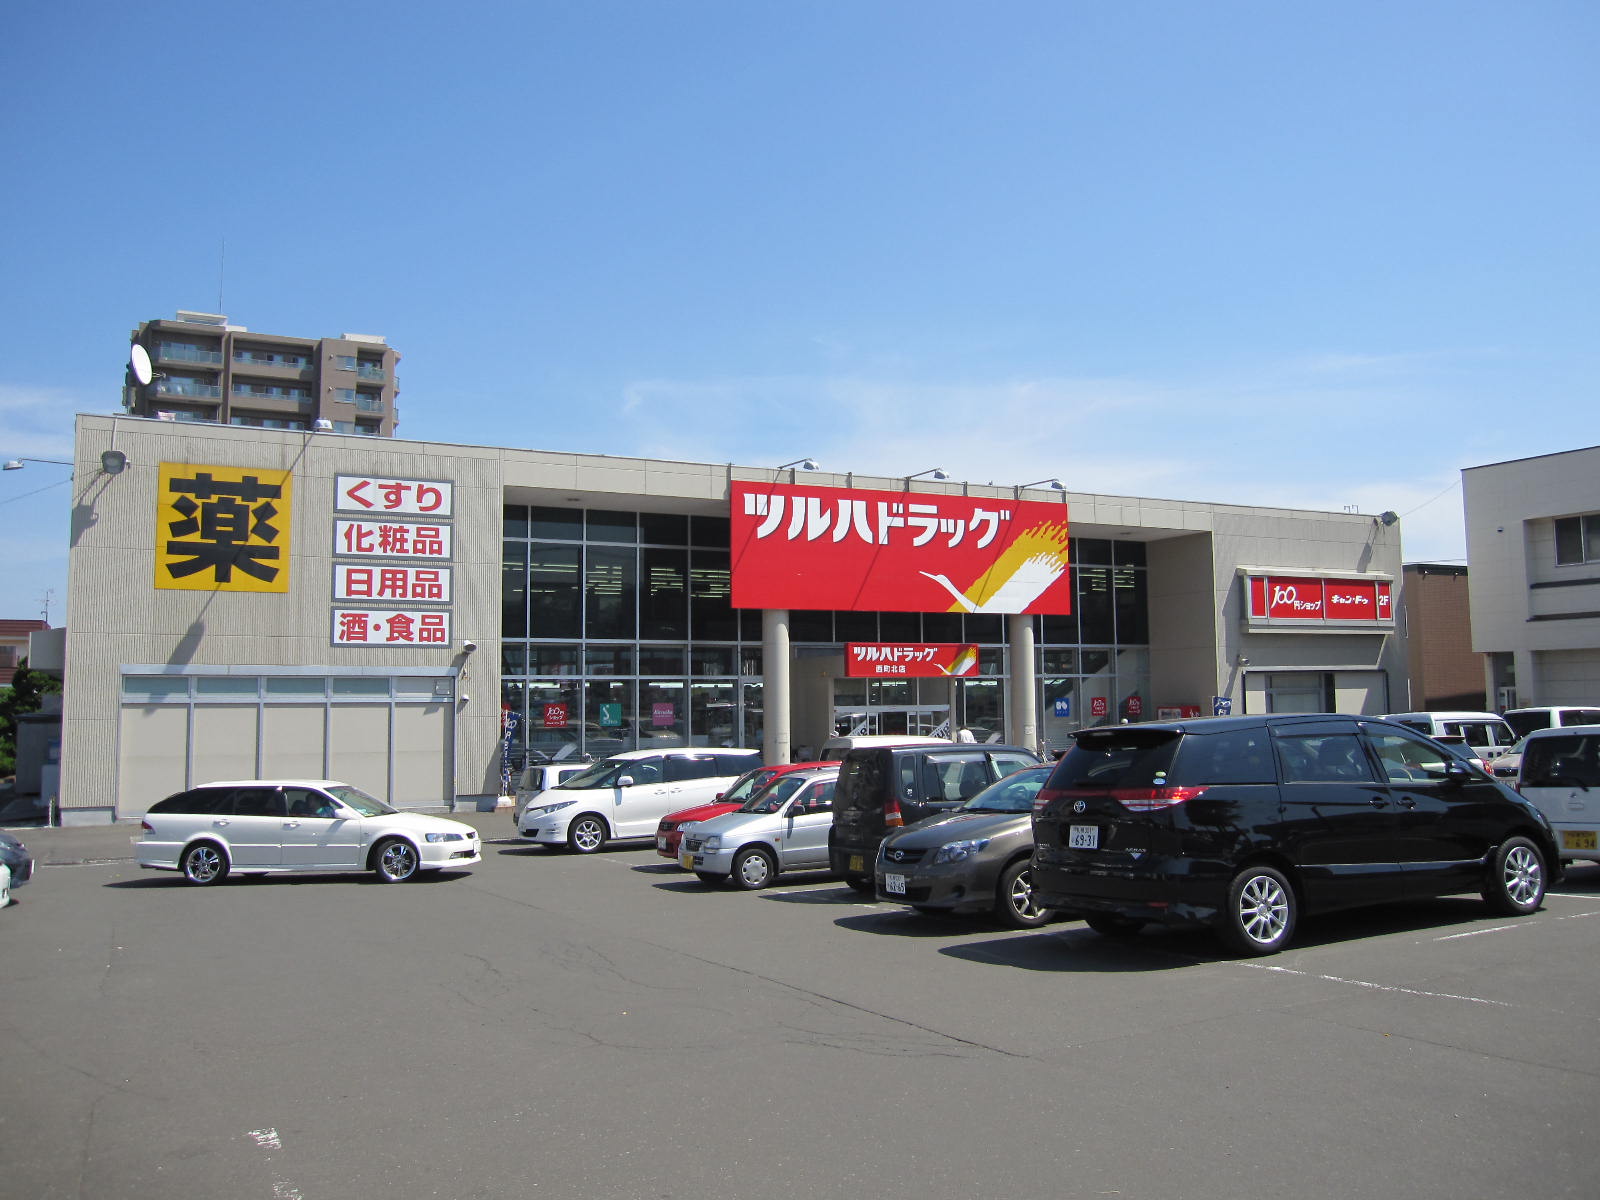 Dorakkusutoa. Pharmacy Tsuruha drag Nishimachi shop 686m until (drugstore)